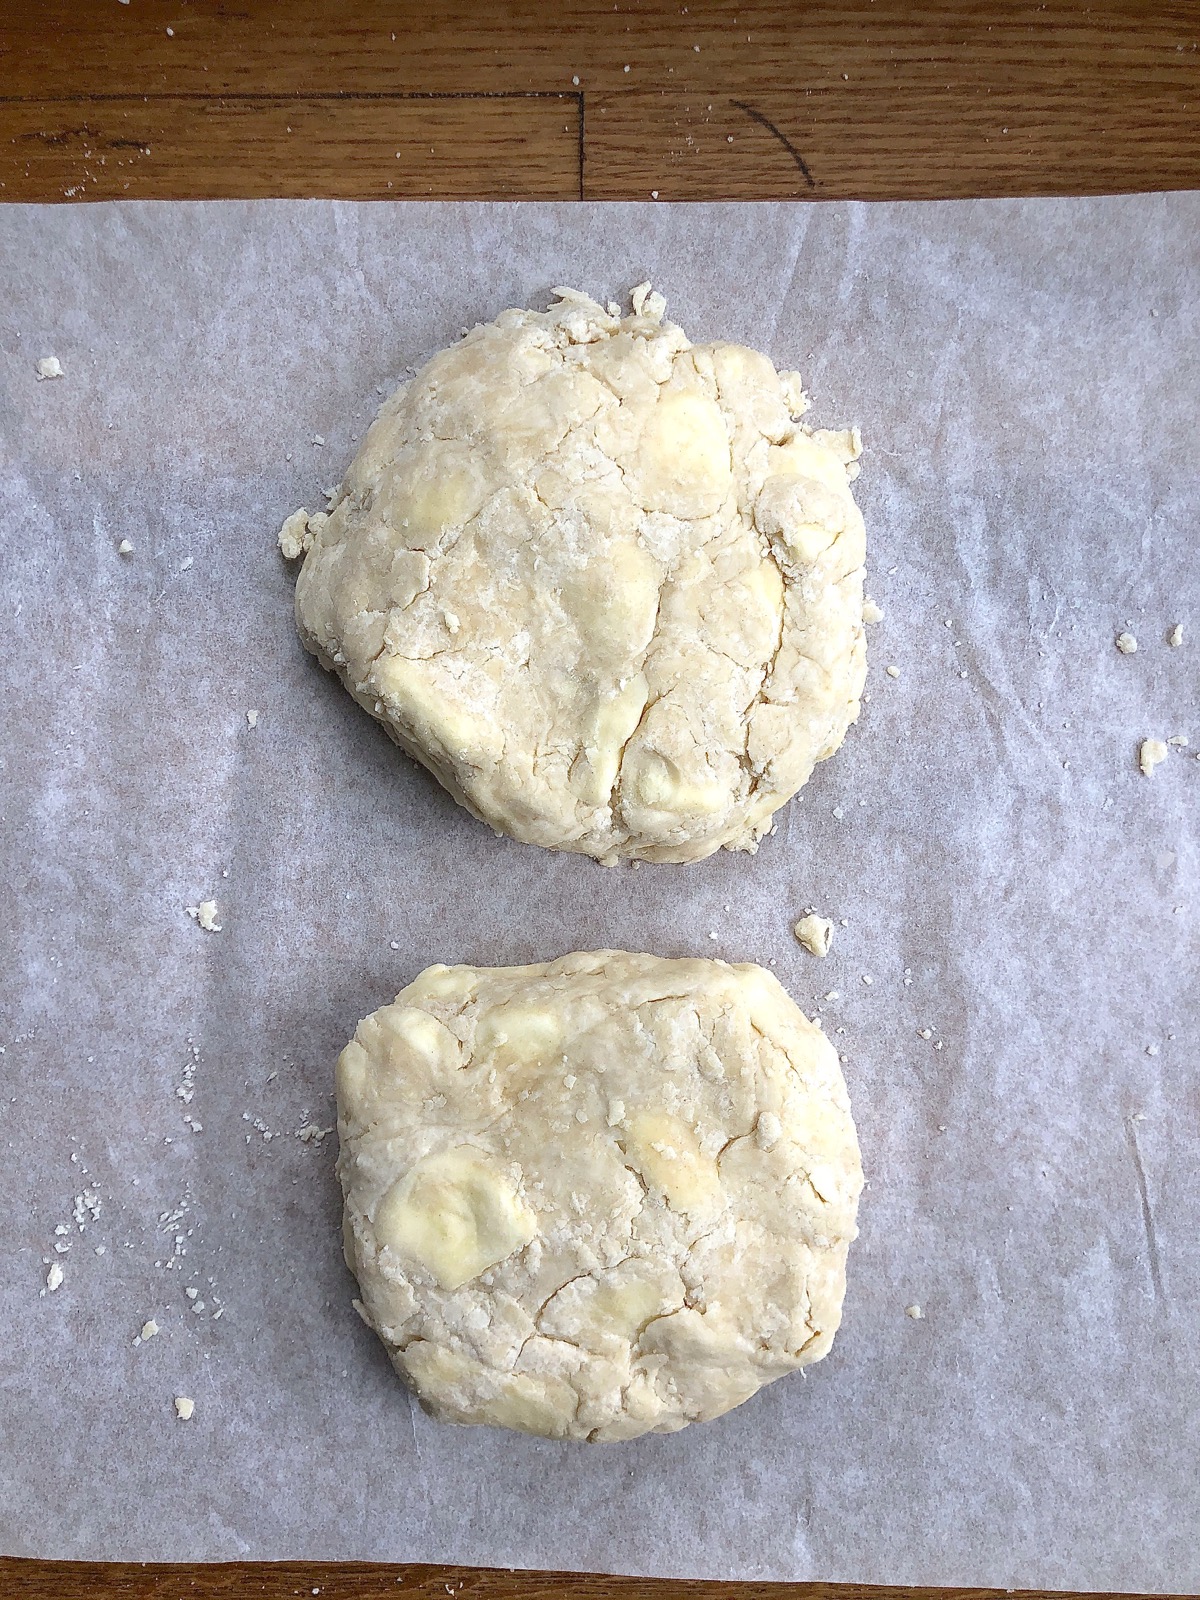 Two rough discs of pie crust dough